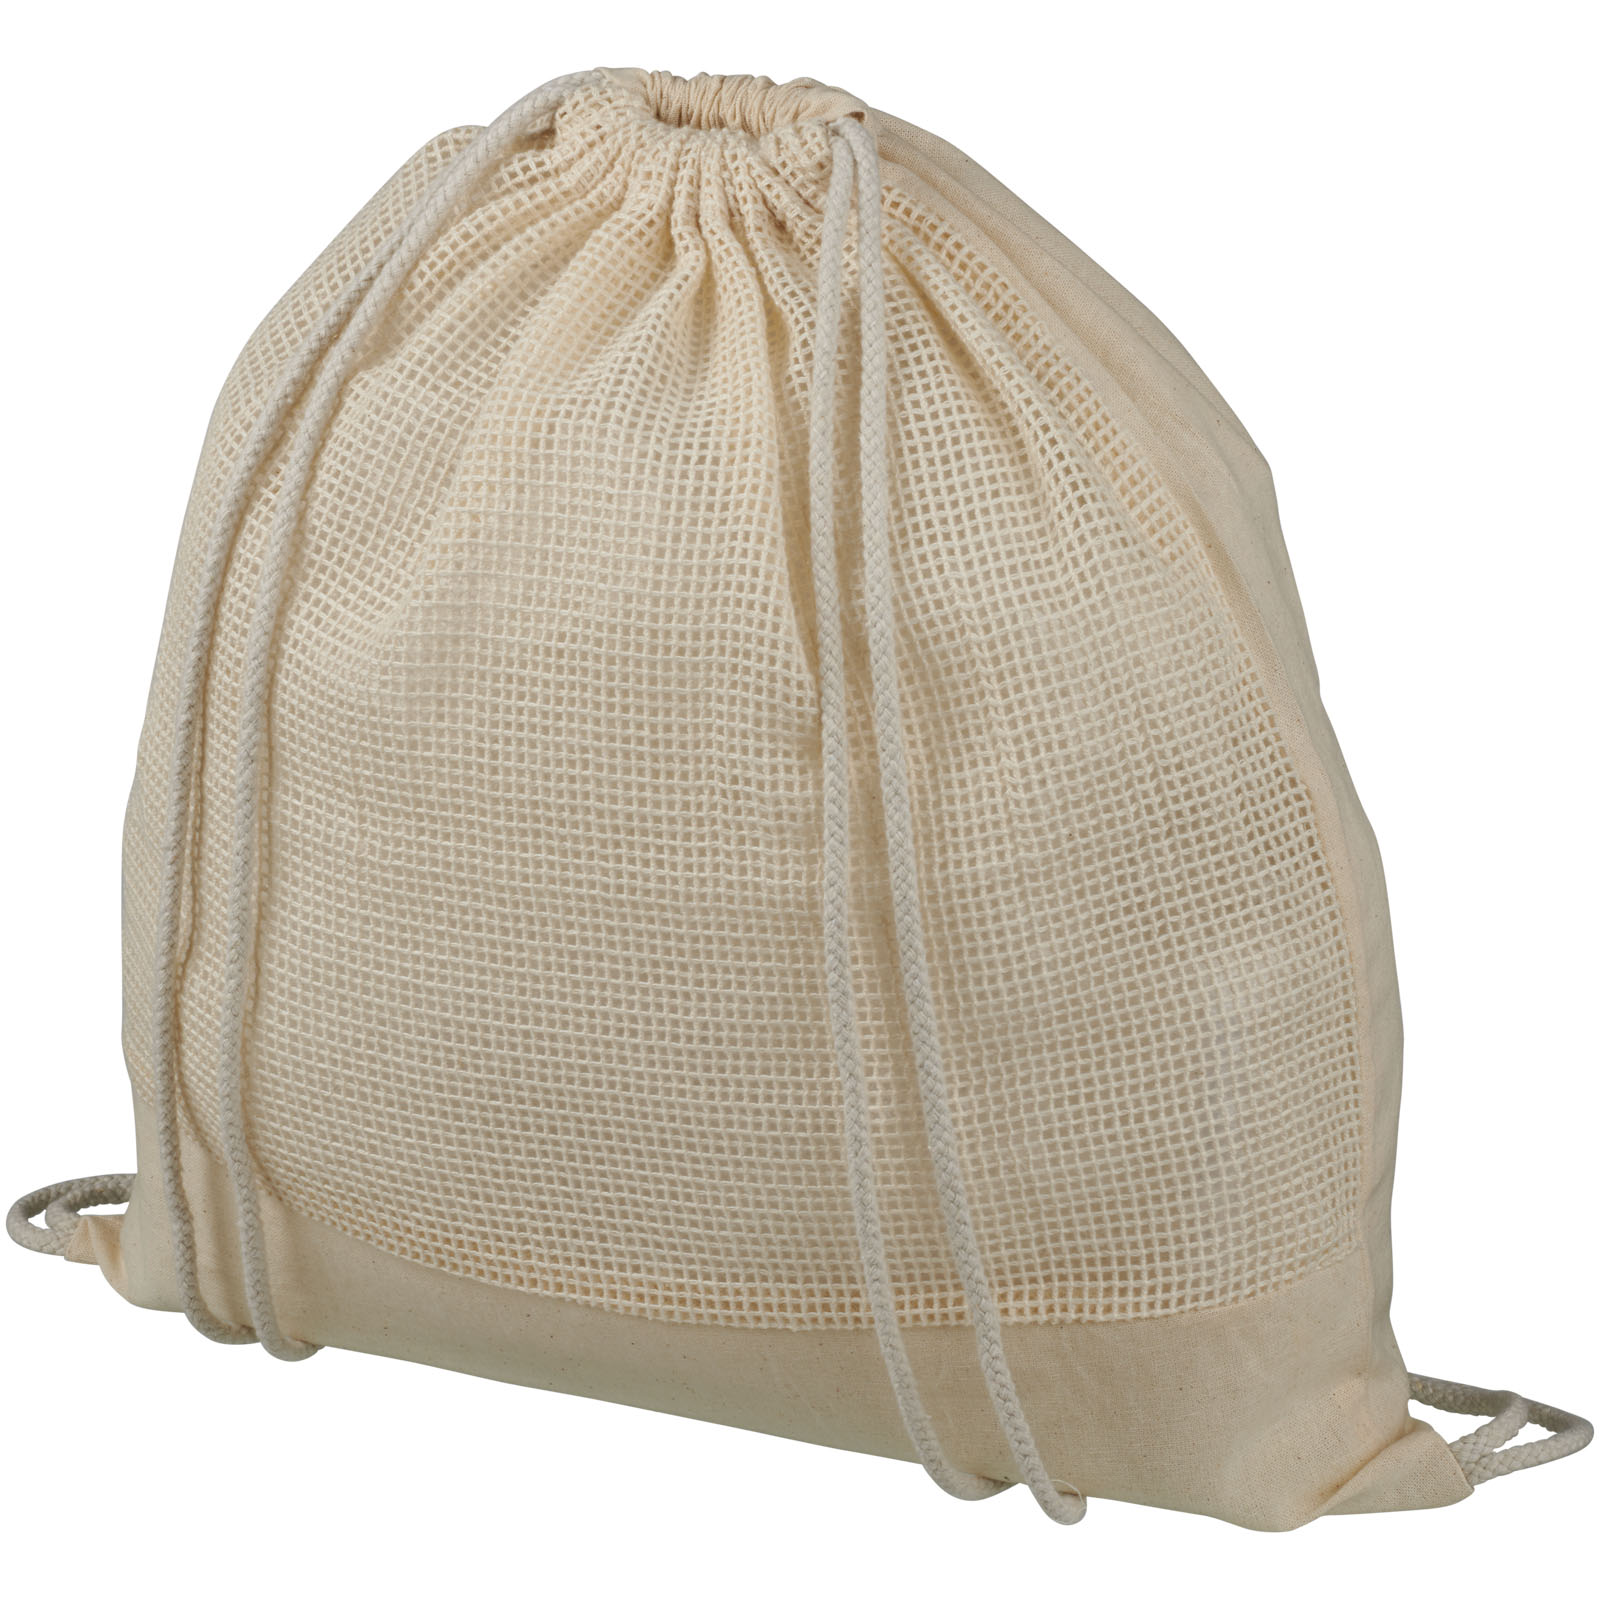 Drawstring Bags - Maine mesh cotton drawstring bag 5L